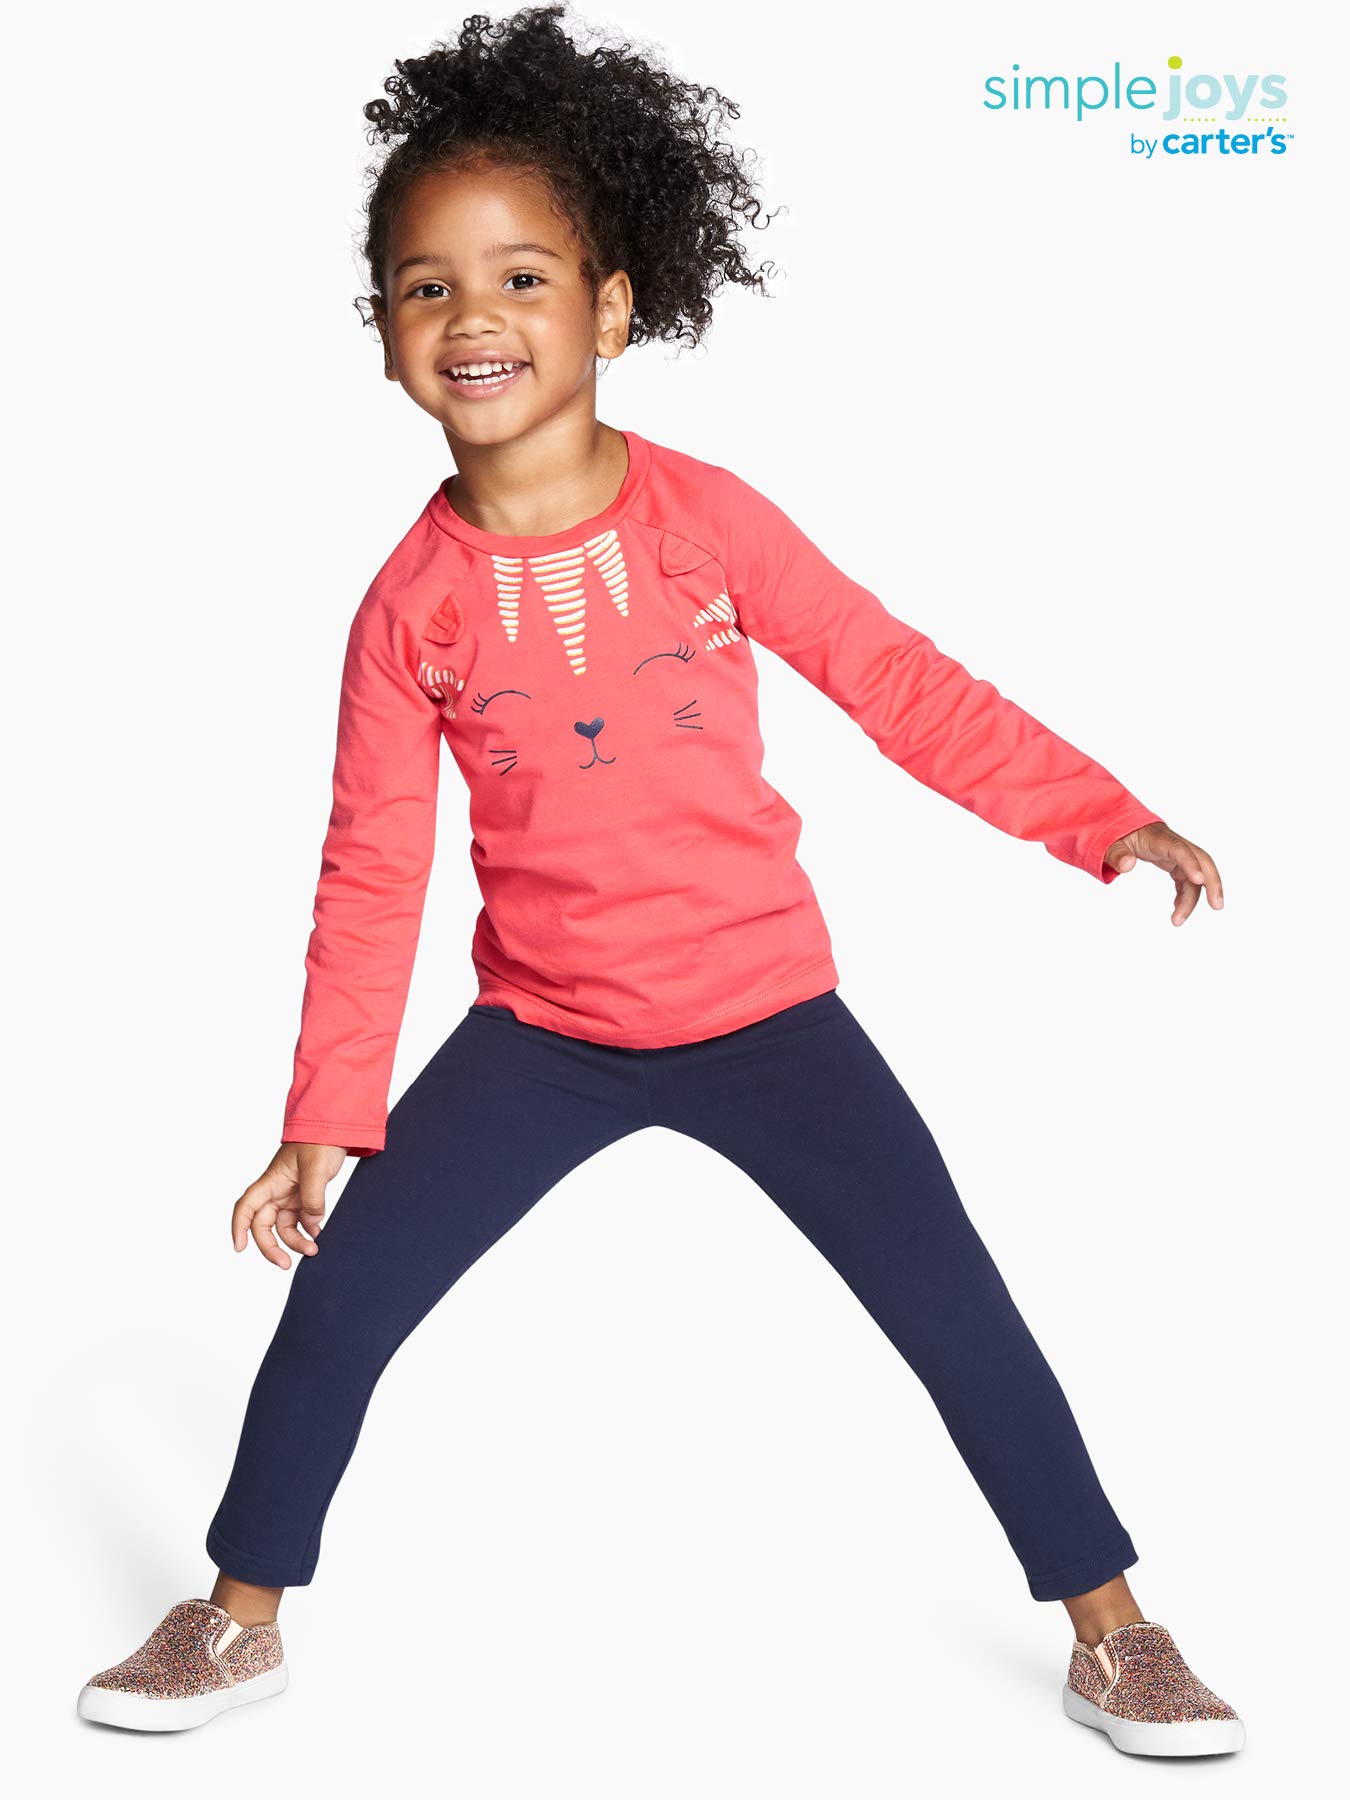 Simple Joys by Carter's Toddler Girls' Lightweight Fleece-Lined Leggings, Pack of 2